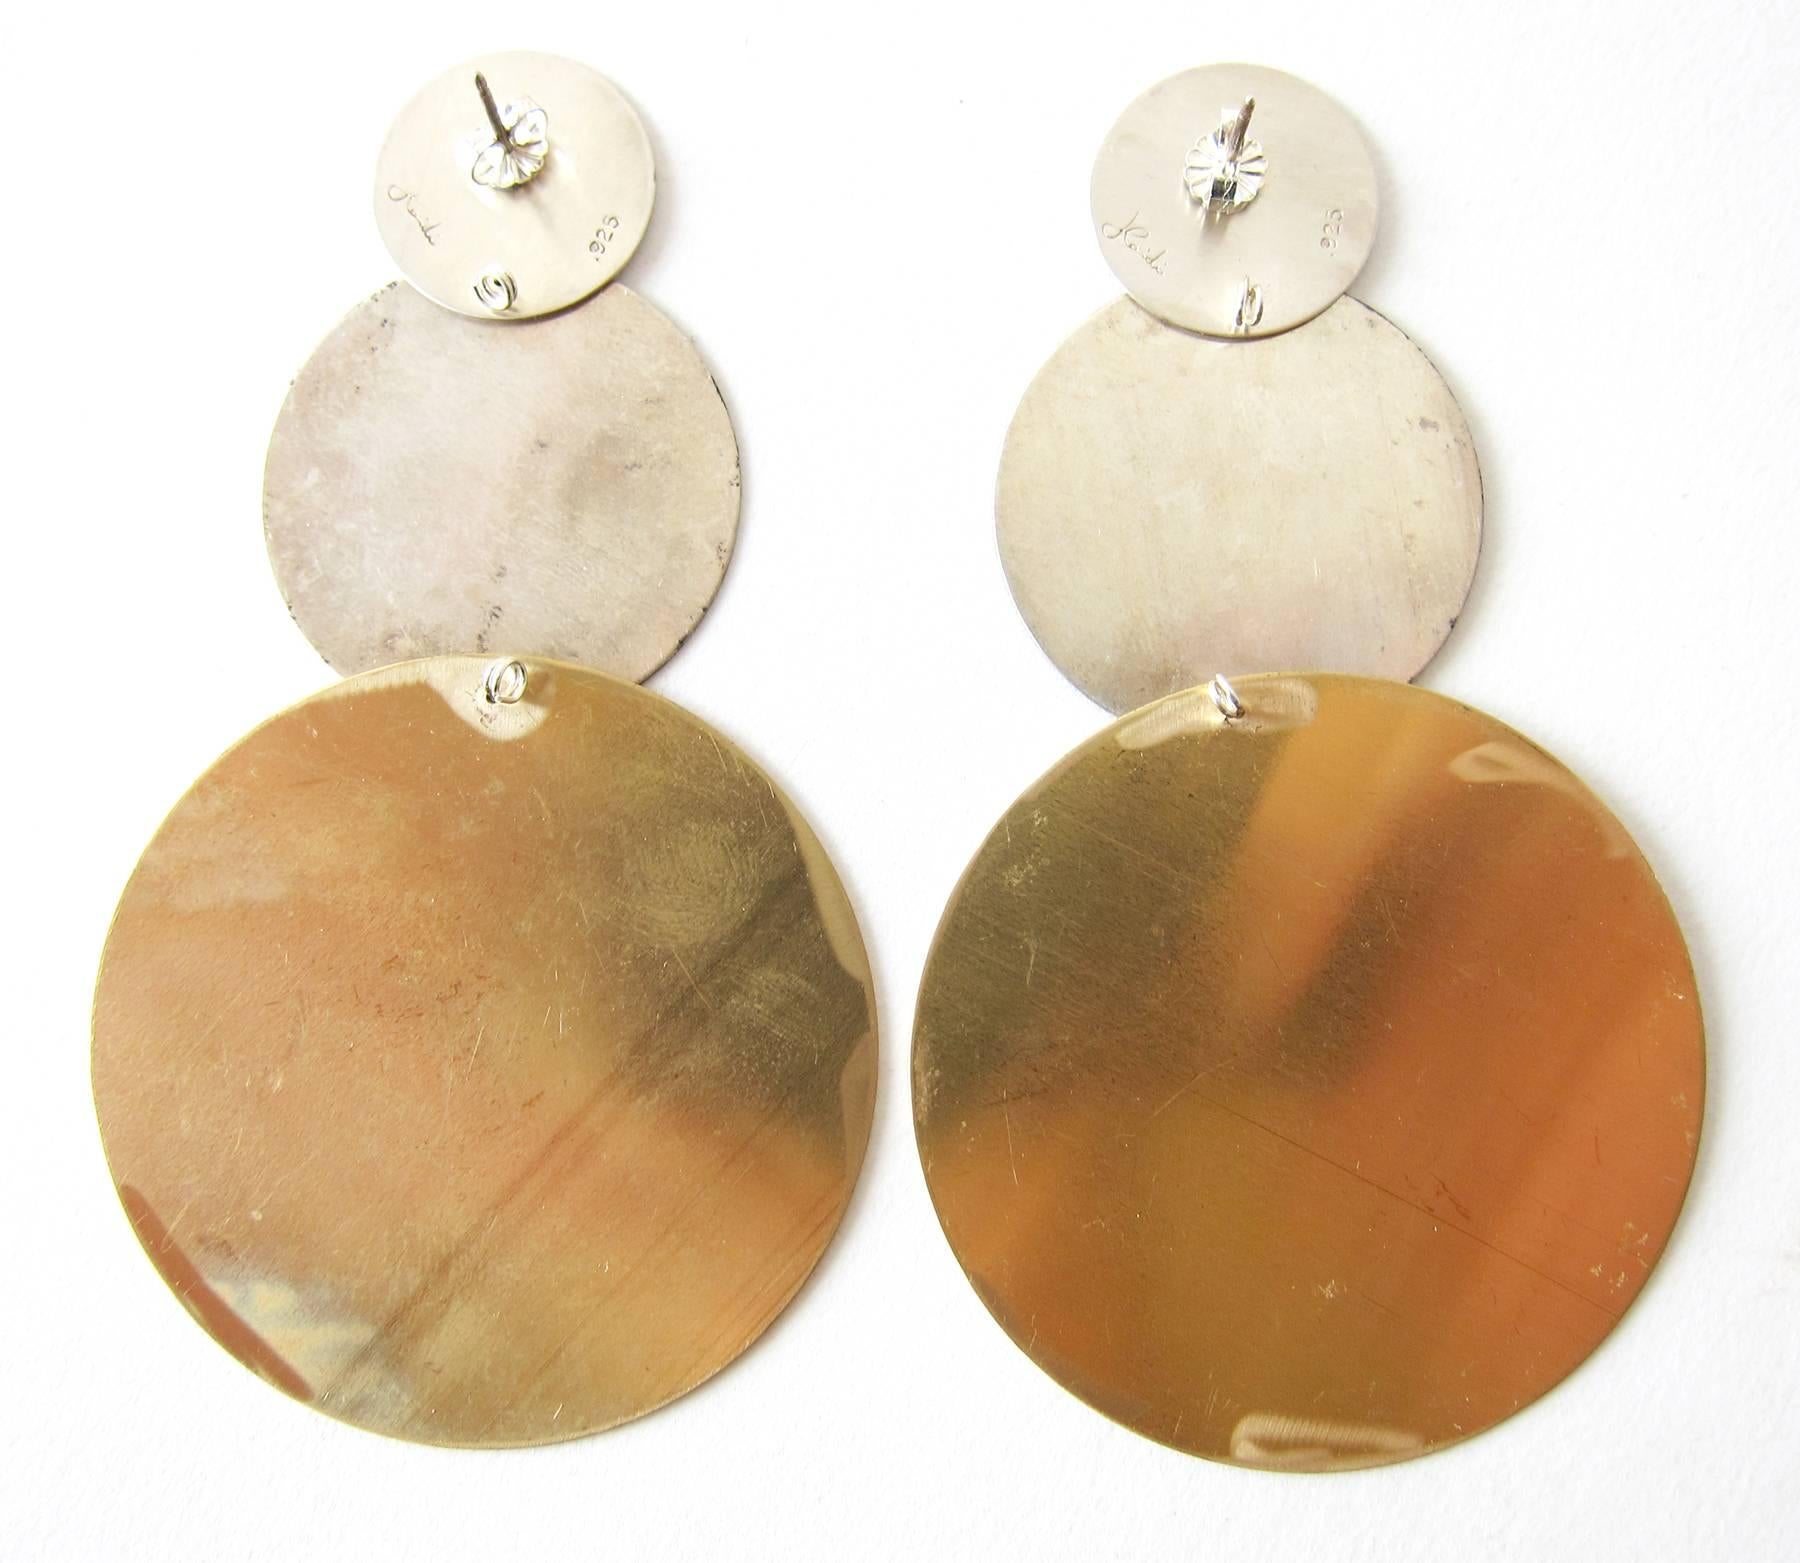 Oxidized sterling silver and brushed brass kinetic modernist earrings created by Heidi Abrahamson of Phoenix, Arizona.  Pierced earrings measure 3.5